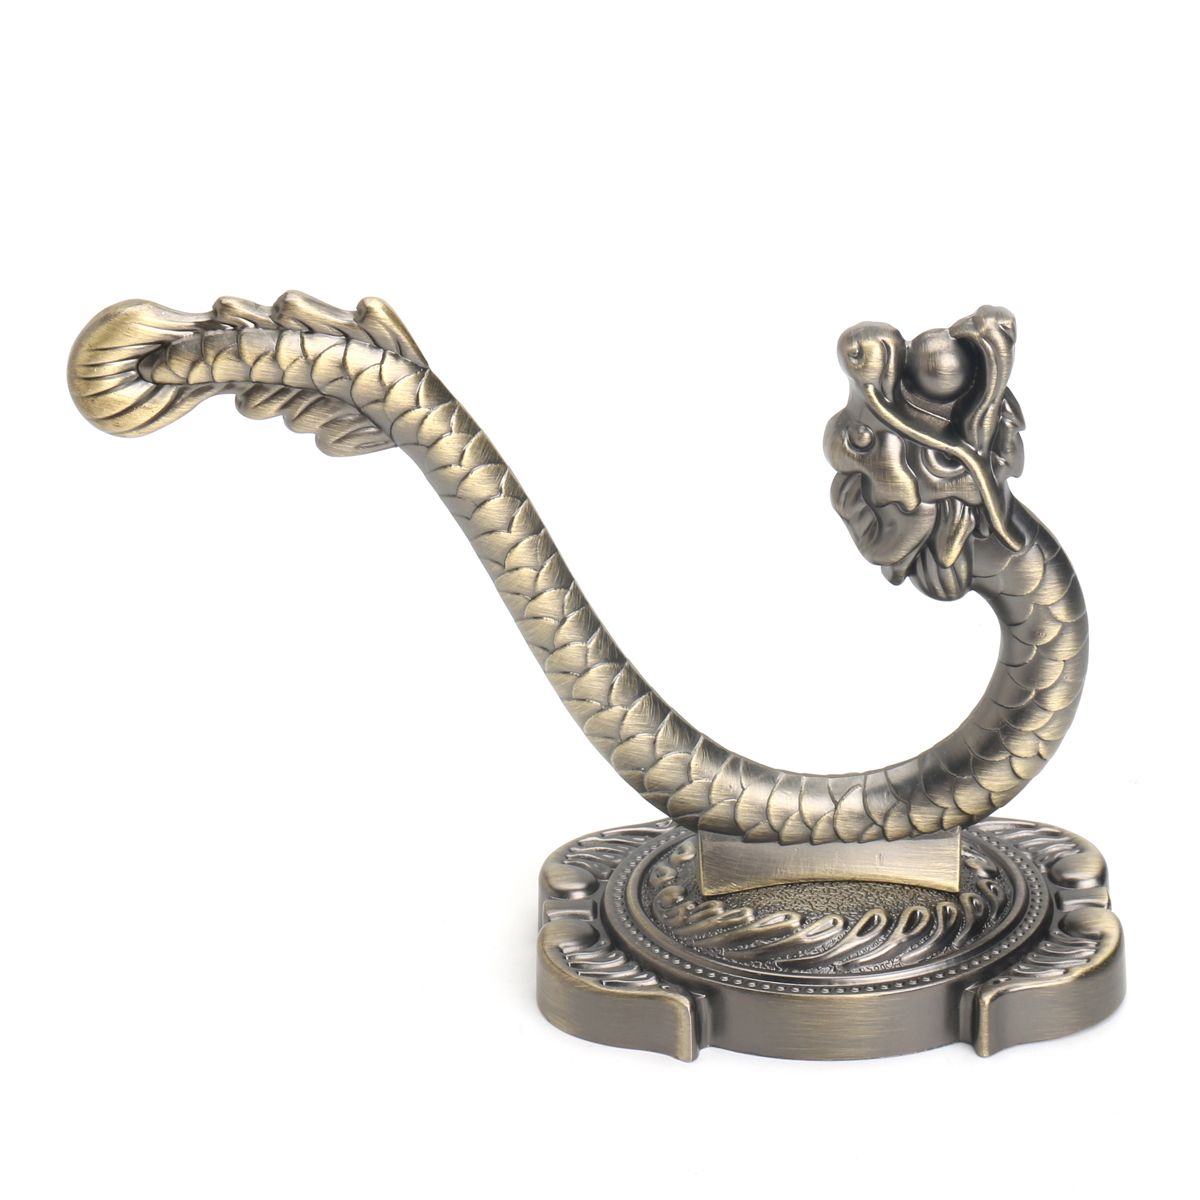 Antique-Brass-Dragon-Style-Bathroom-Towel-Hanger-Holder-Coat-Hat-Hook-Wall-Mount-1290866